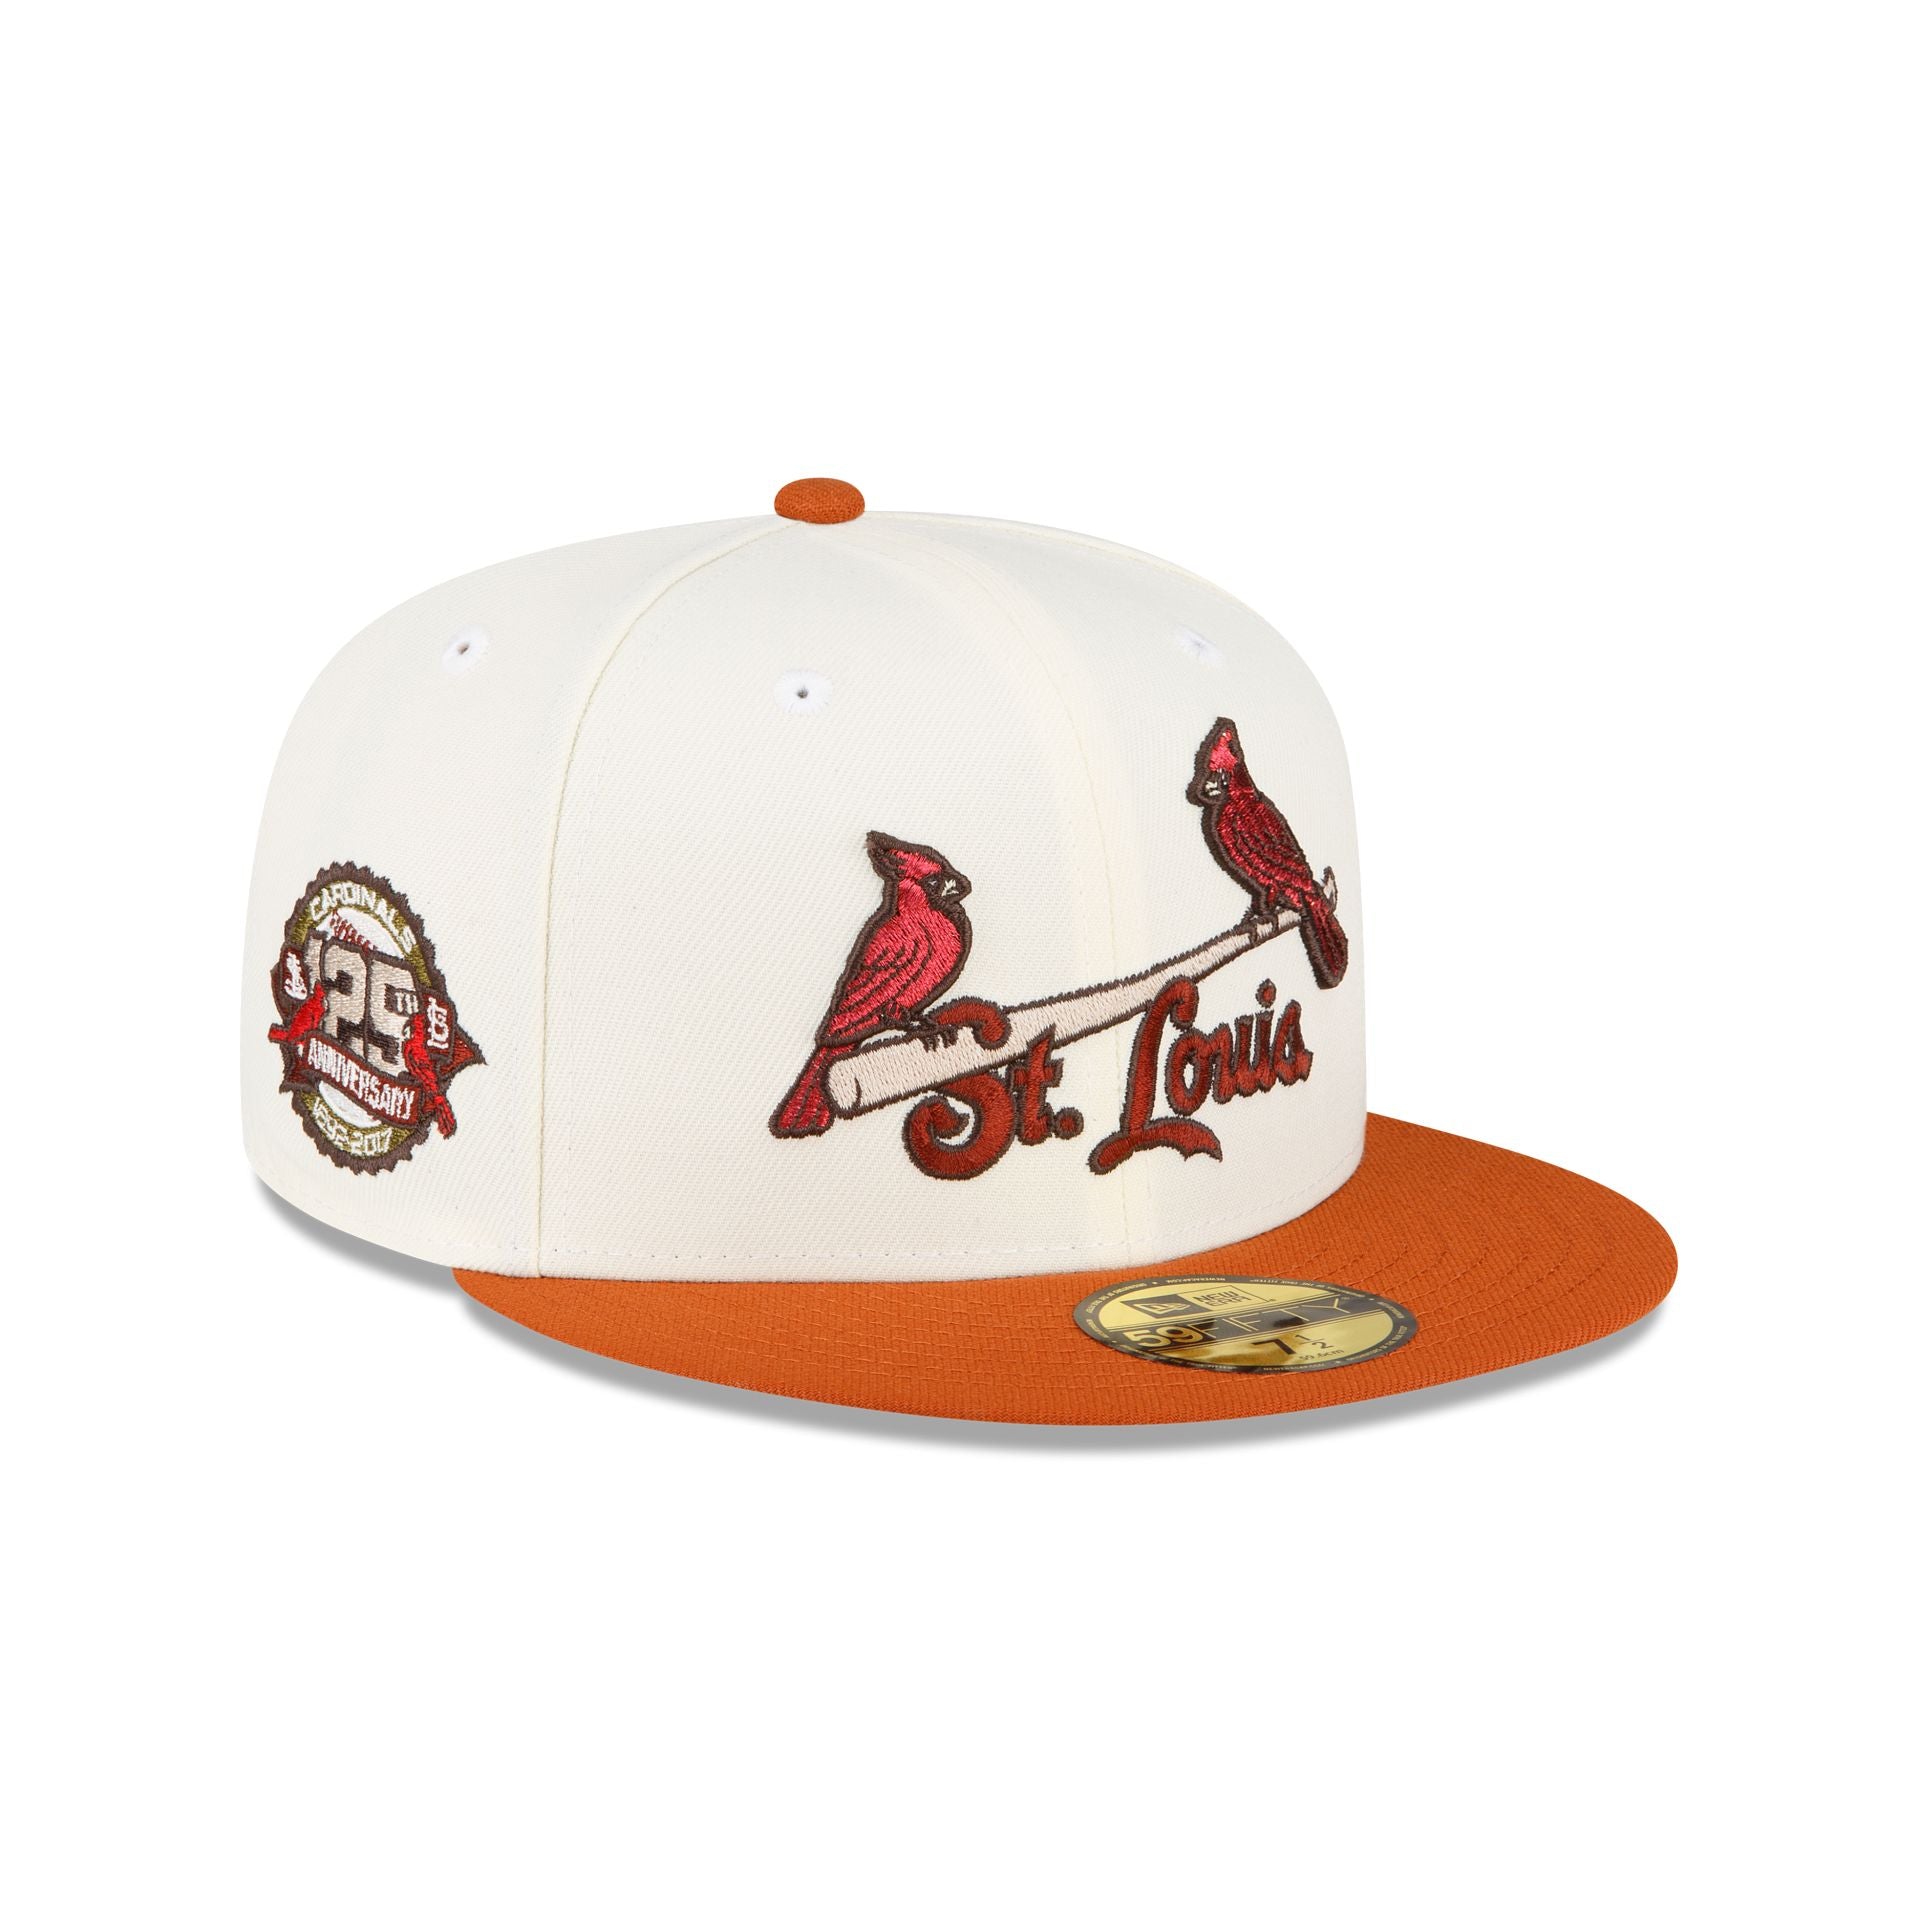 New Era Hat - St. Louis Cardinals - All White 7 7/8 / White